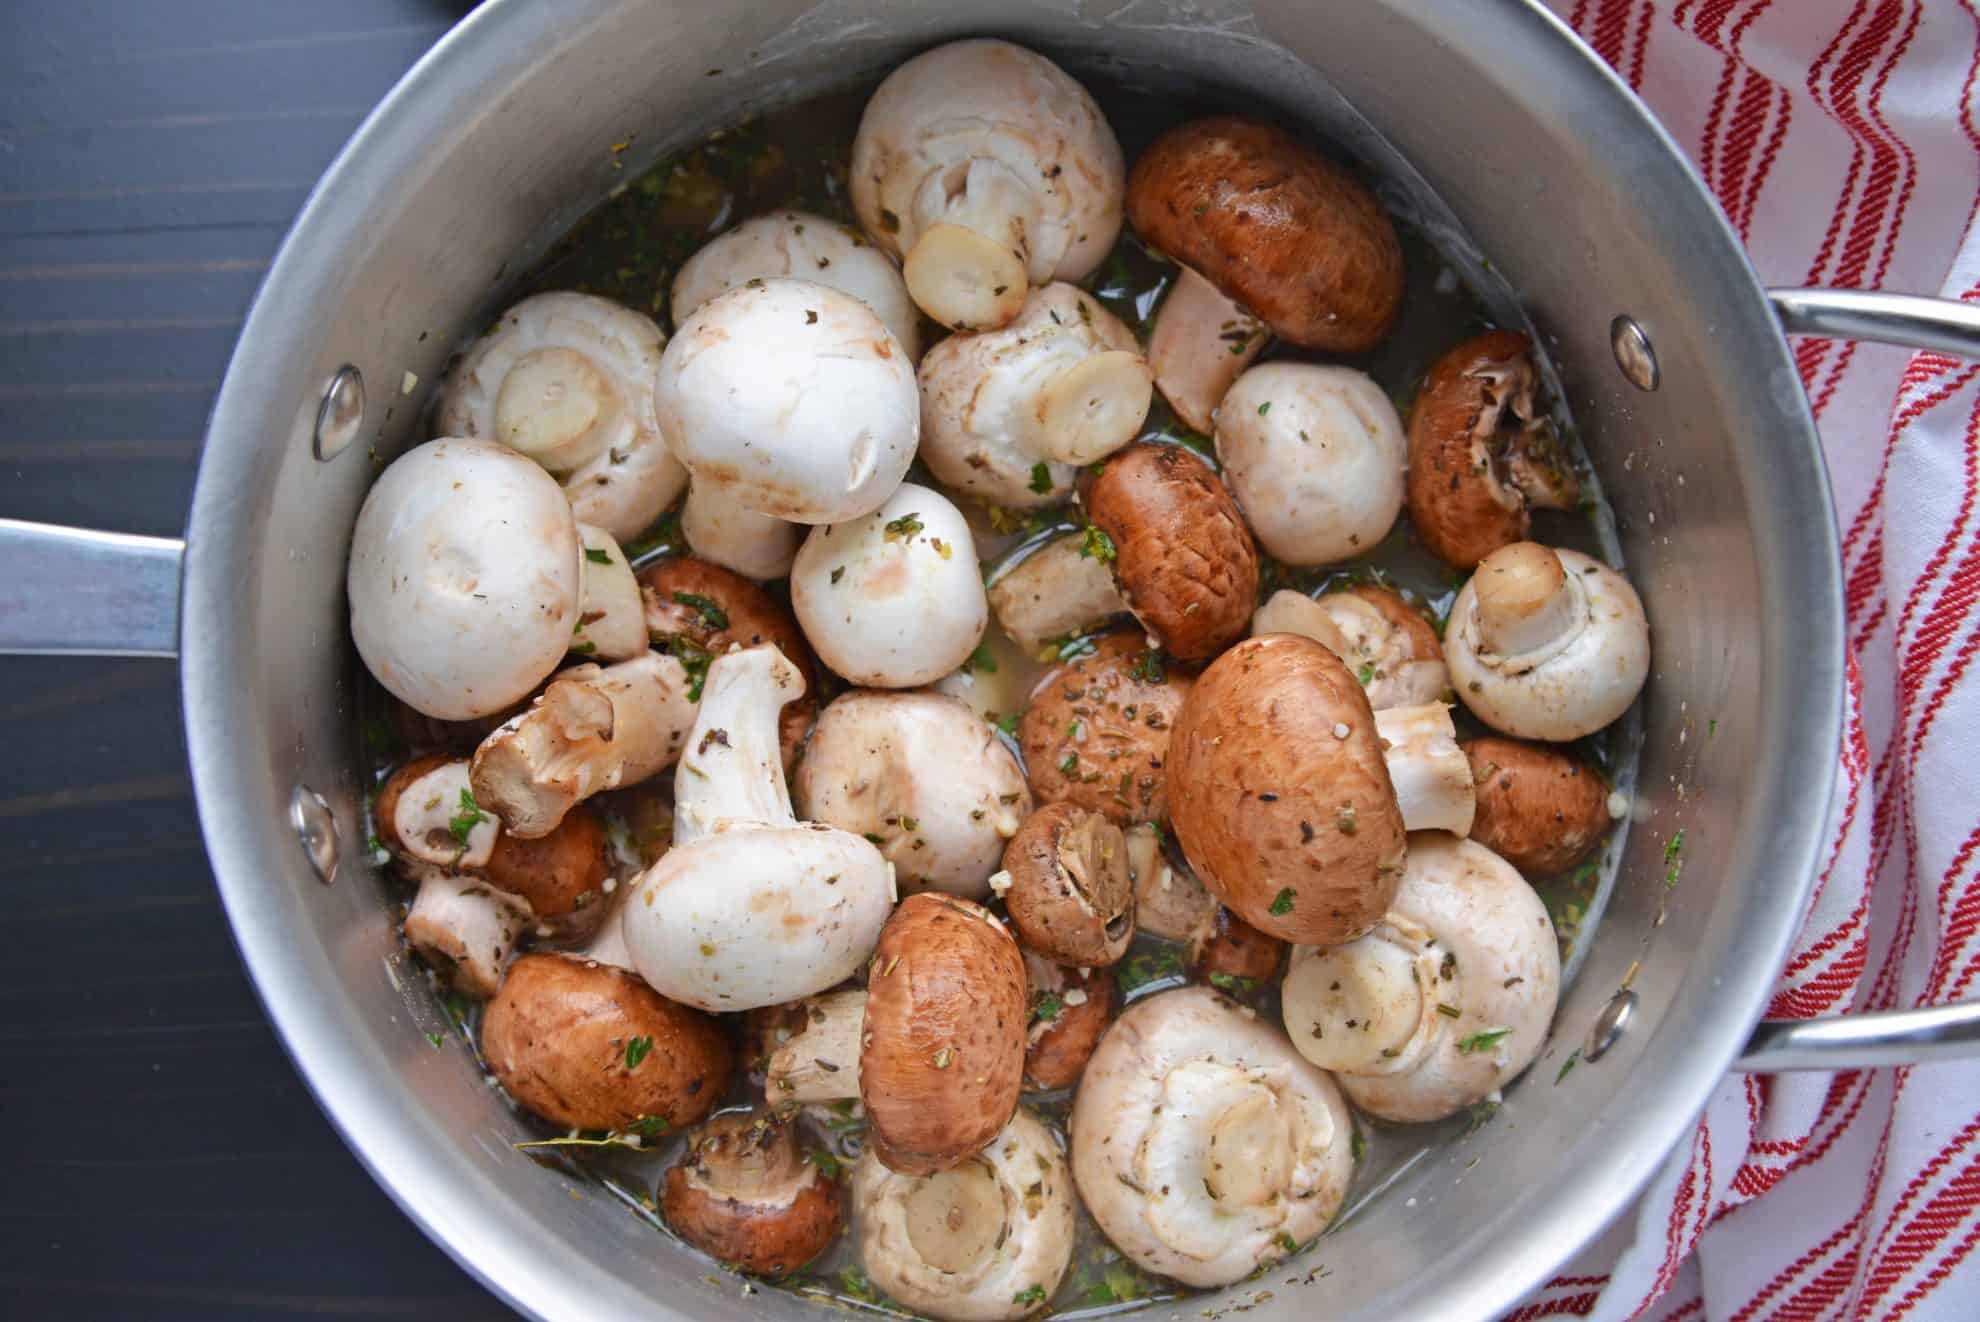 Sauteed mushrooms in stainless steel sauce pan